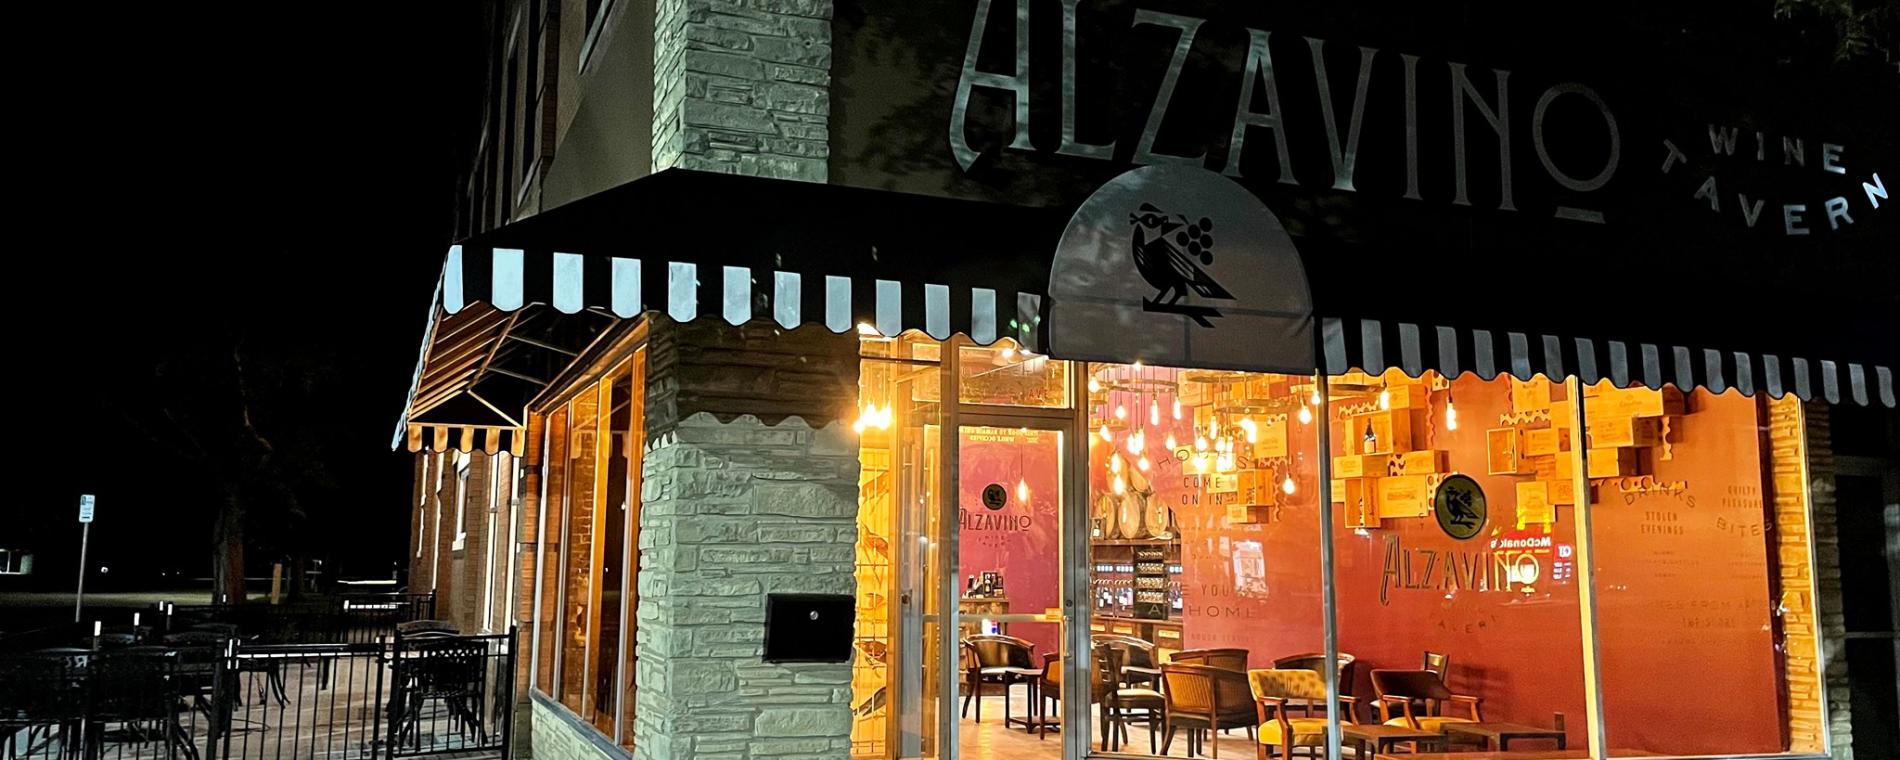 Alzavino Wine Tavern exterior